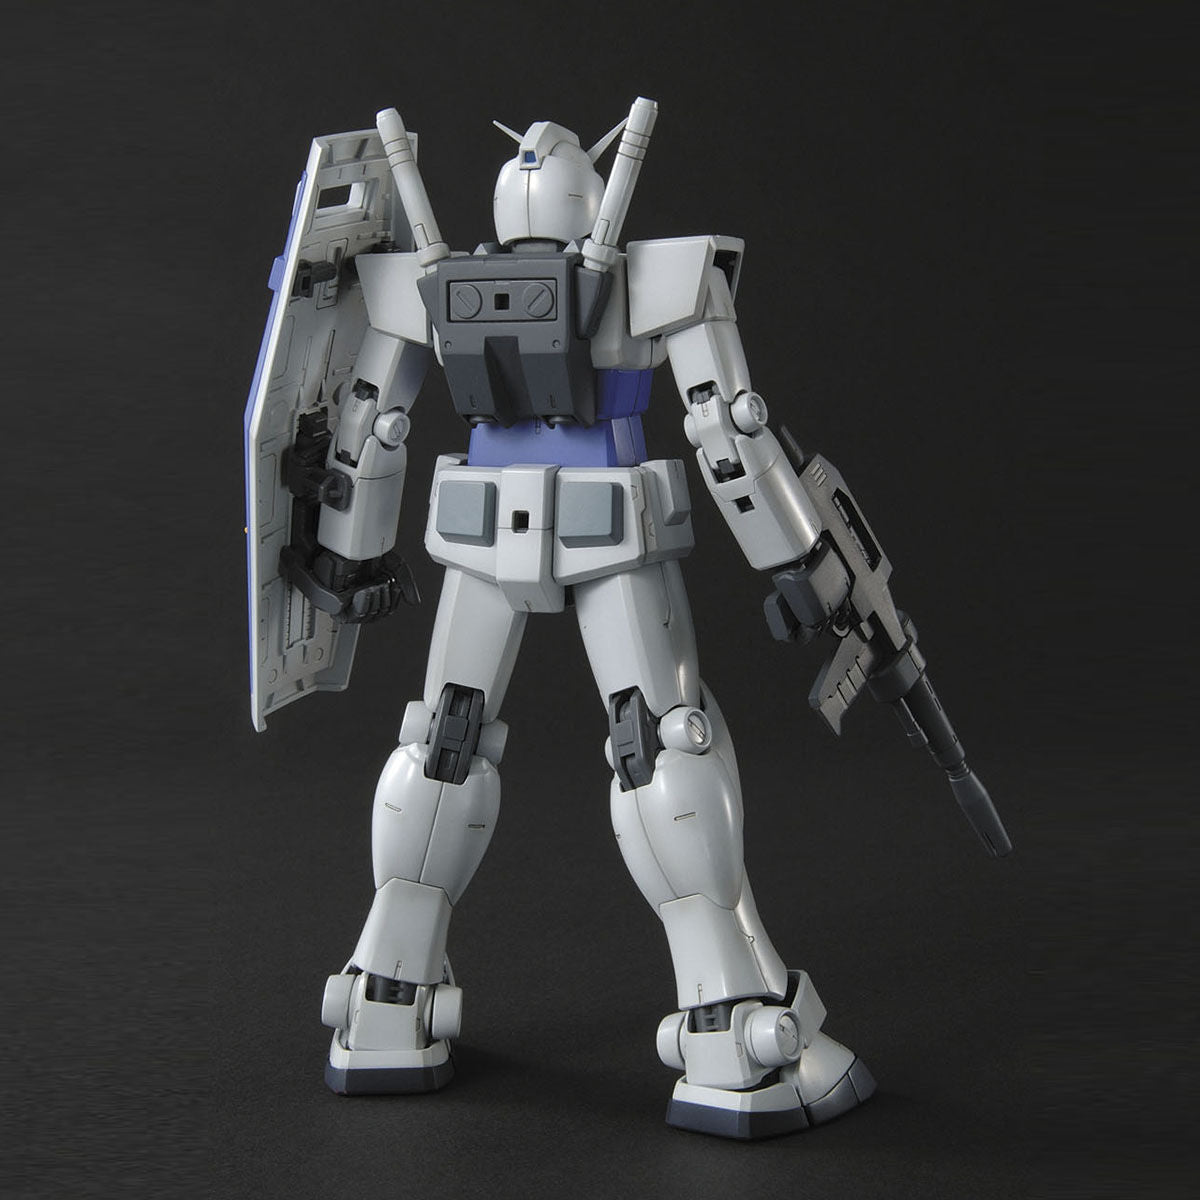 MG 1/100 RX-78-3 G-3 Gundam Ver 2.0